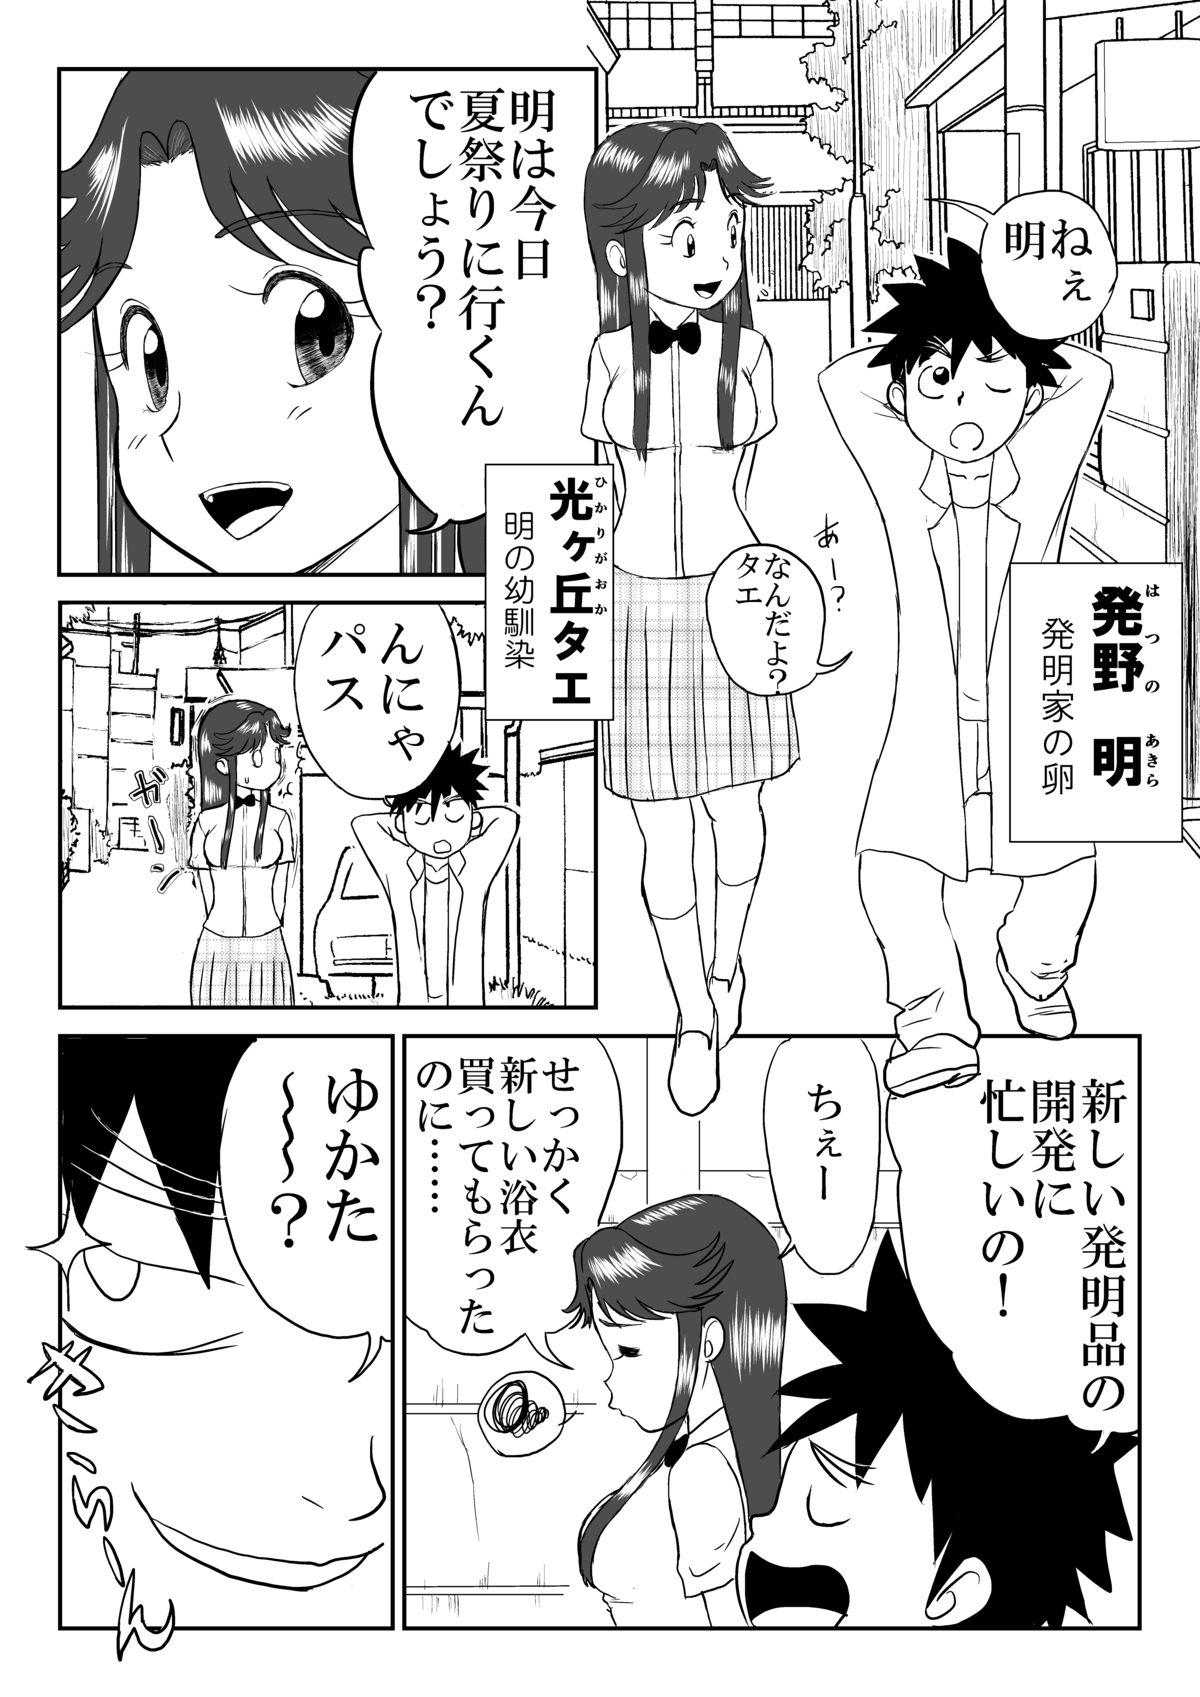 Piss Mousou Meisaku Kuradashi Gekijou "Nankite" Ex Girlfriends - Page 2